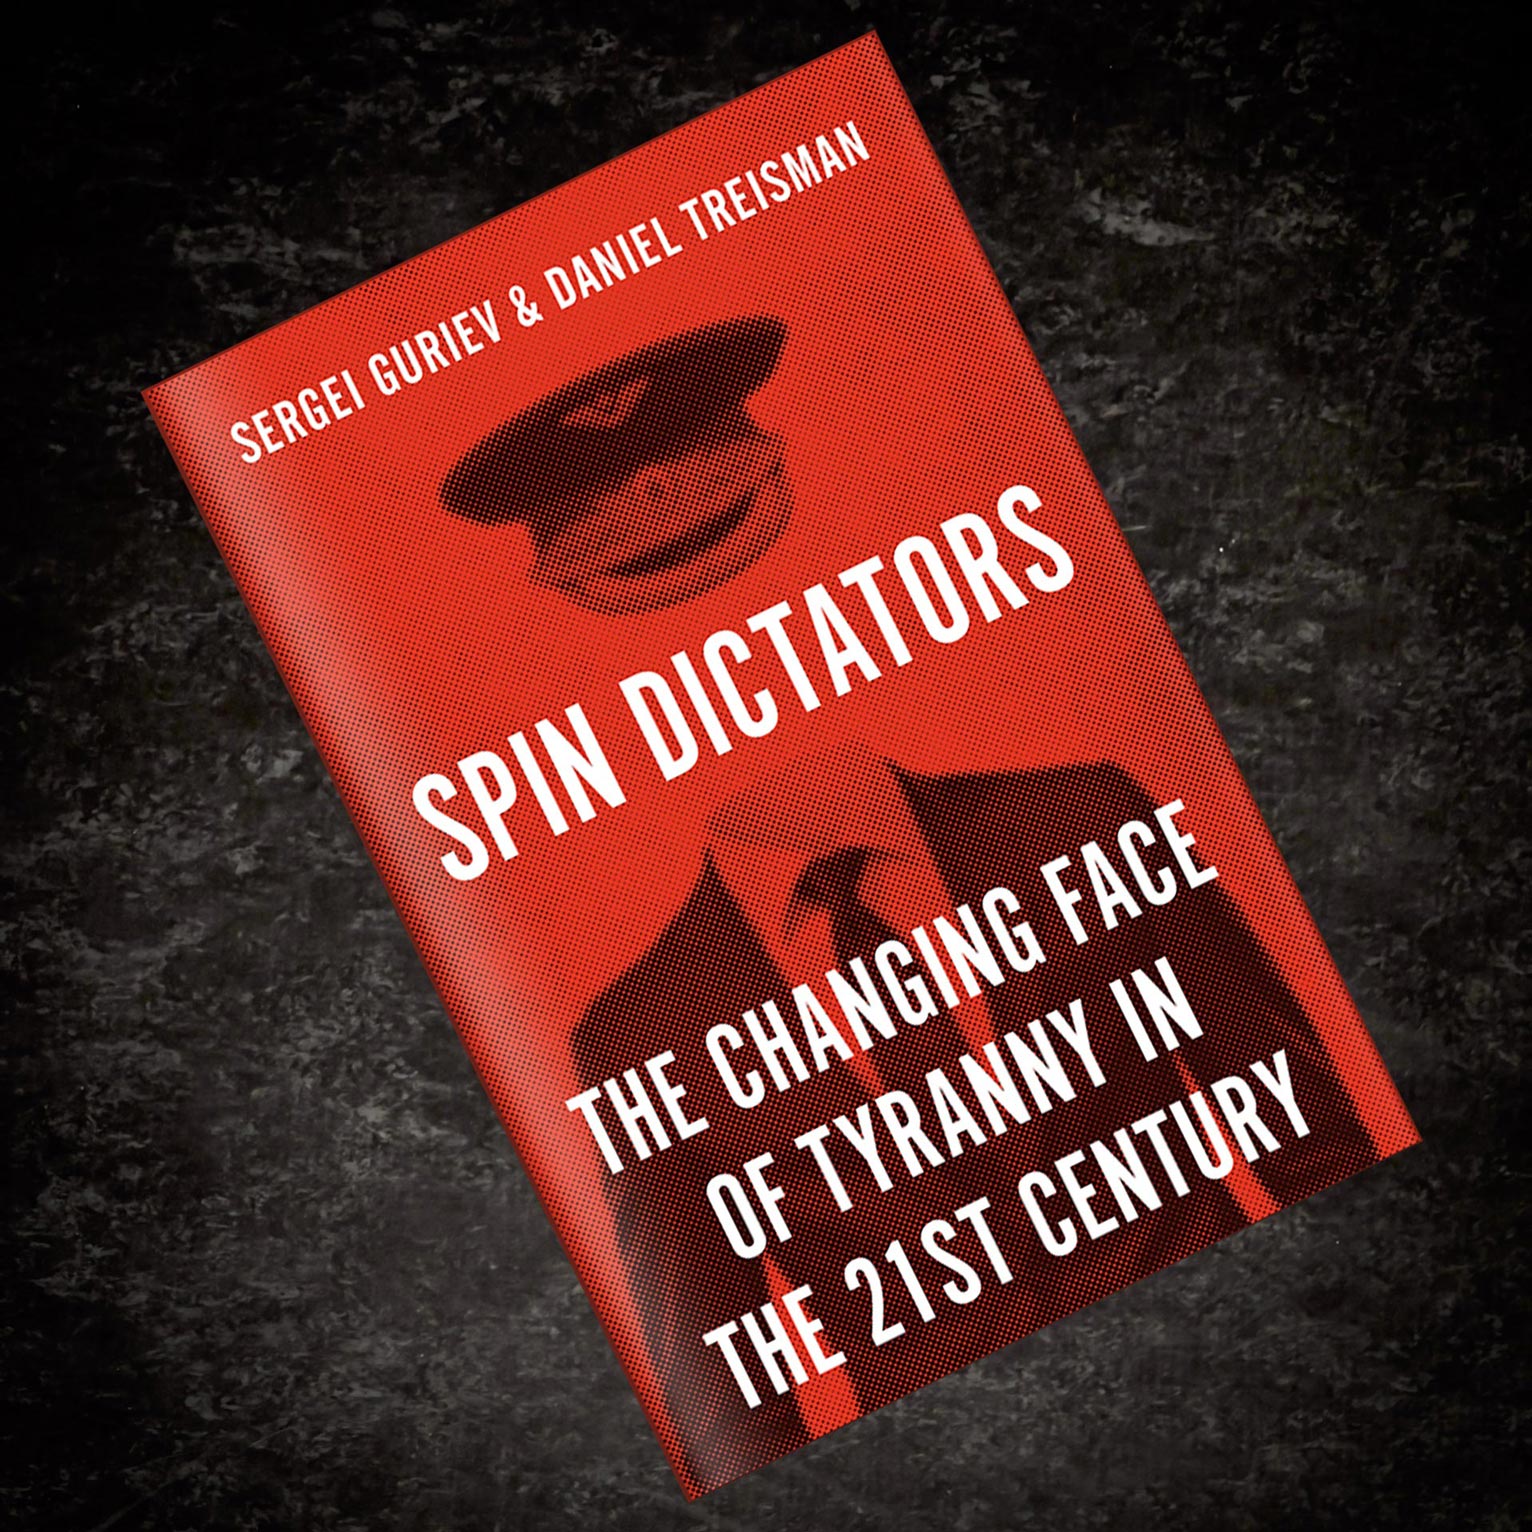 "Spin Dictators" by Sergei Guriev and Daniel Treisman